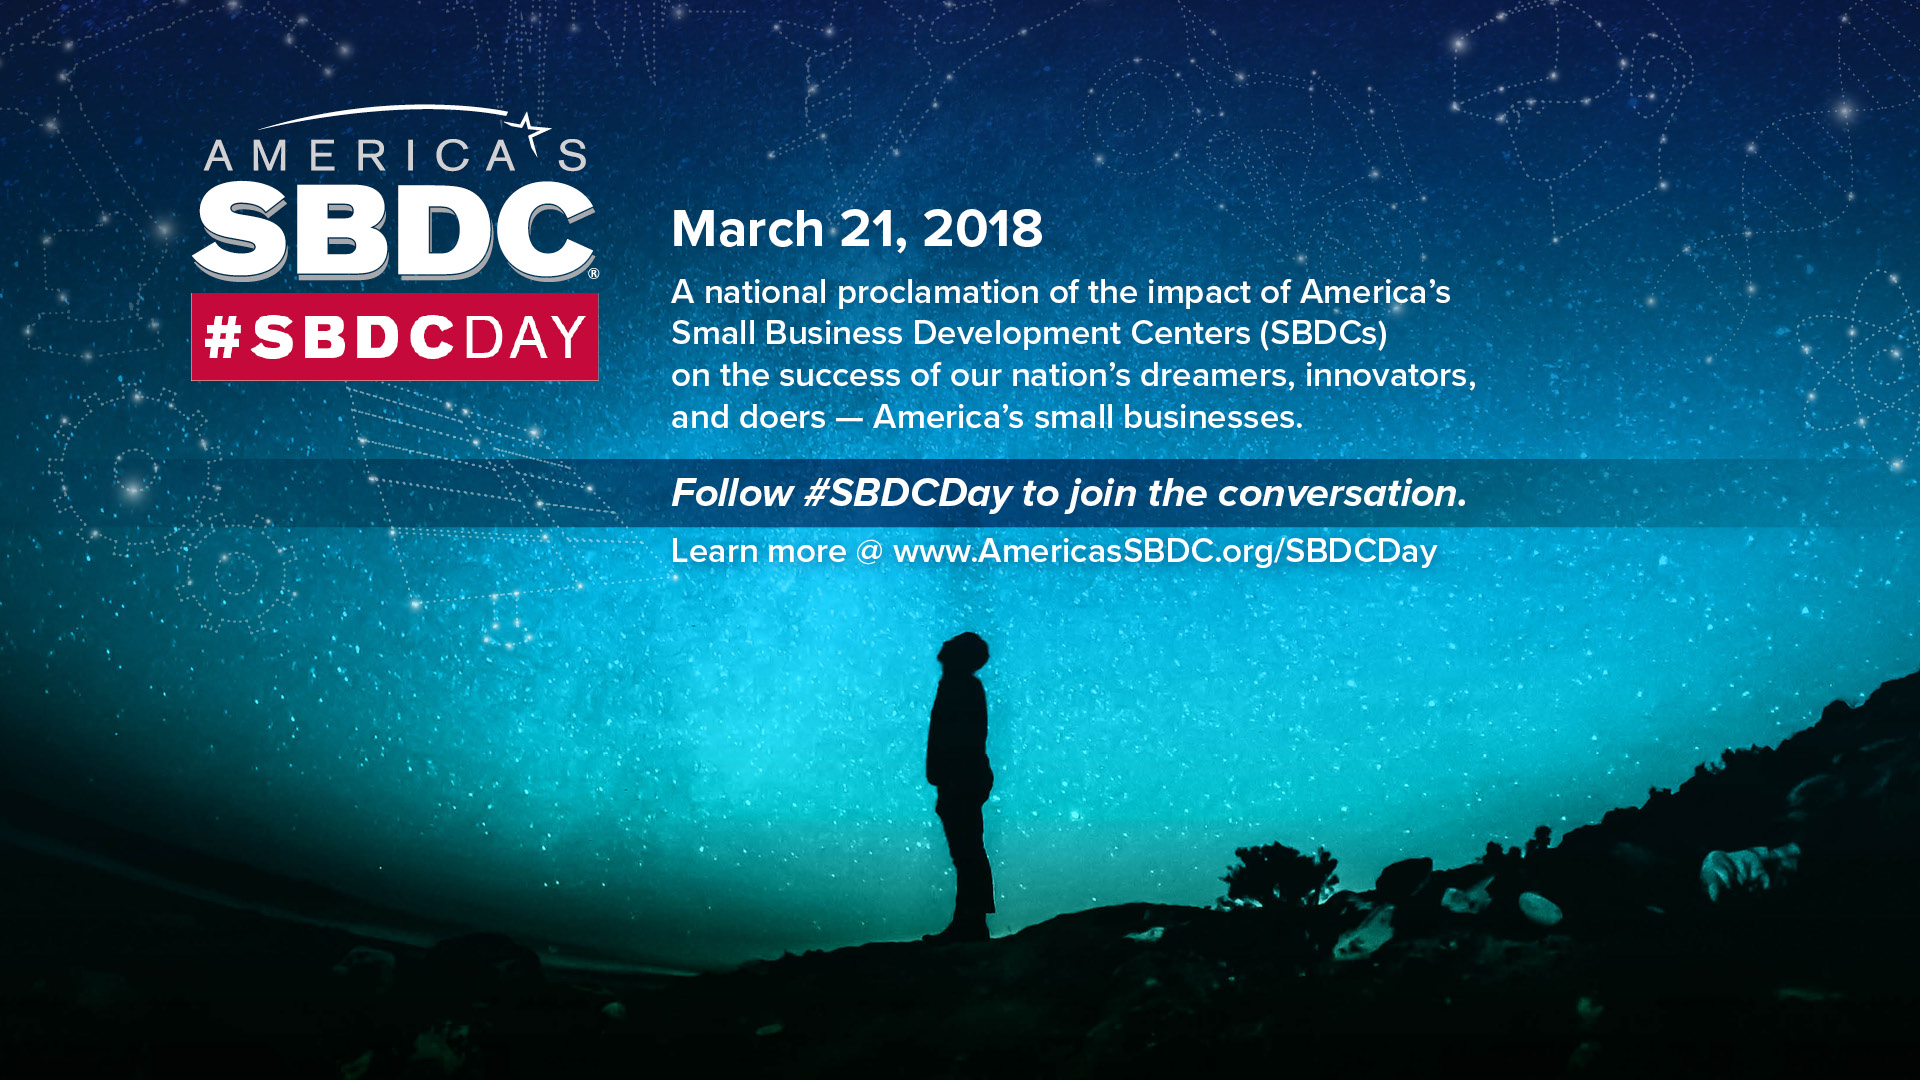 America's SBDC #SBDCDay, March 21, 2018